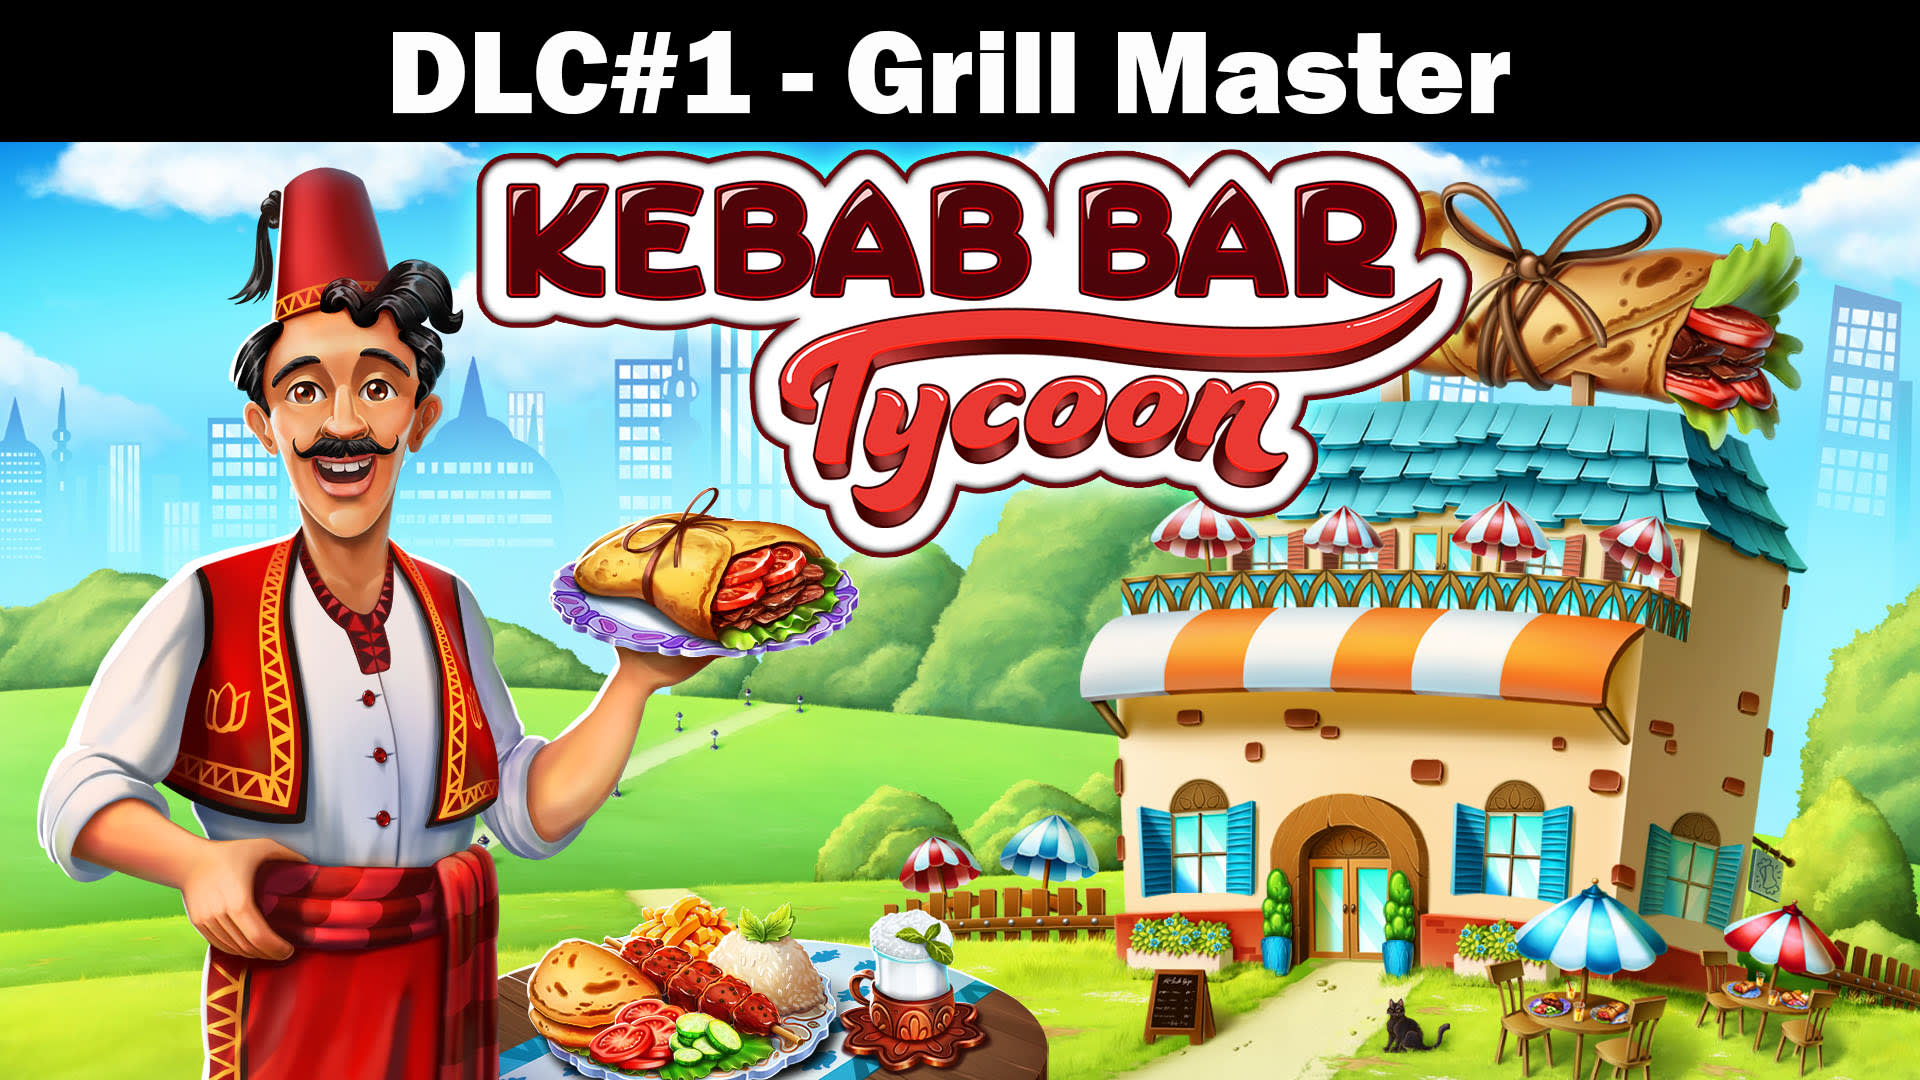 Kebab Bar Tycoon - DLC#1 - Grill Master 1